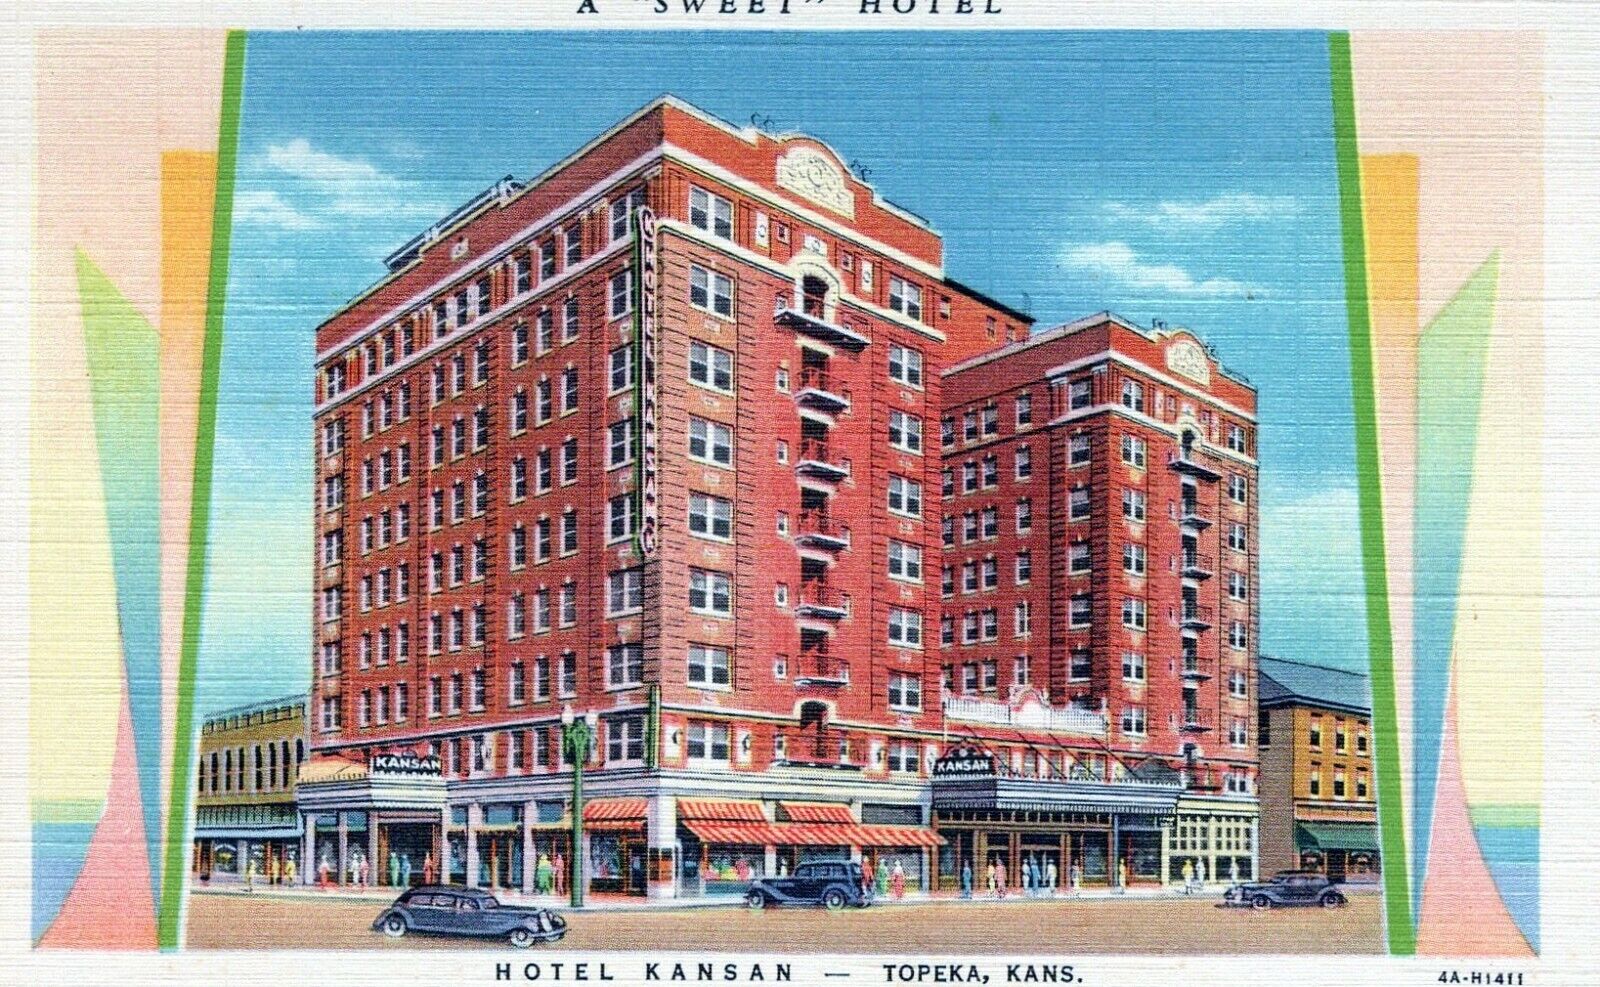 A Sweet Hotel Hotel Kansan Topeka Kansas Classic Car Vintage Linen Post Card 